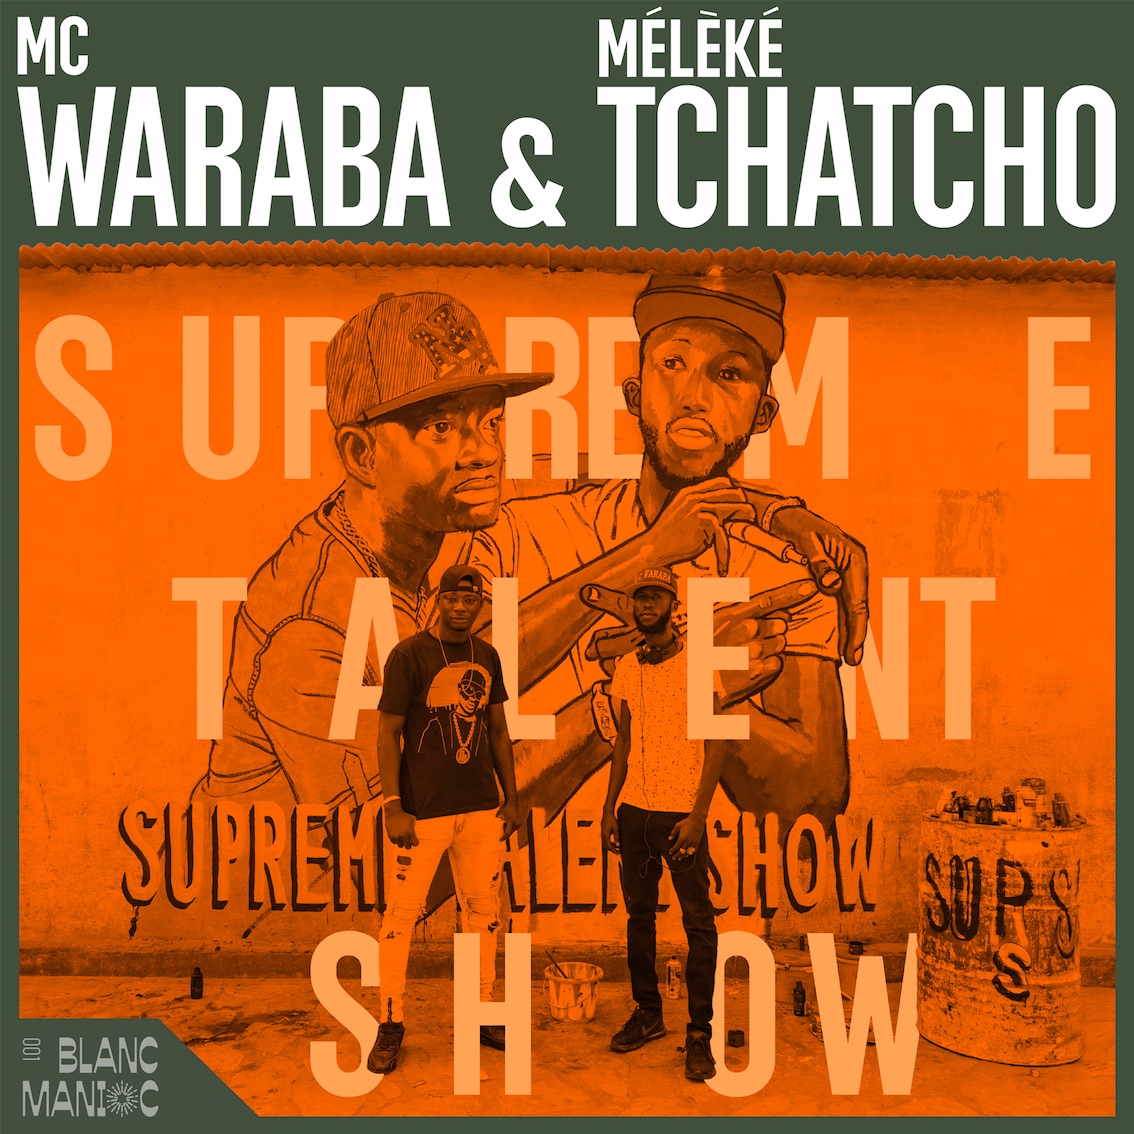 Suprême Talent Show, MC Waraba, Mélèké Tchatcho, Jarring Effects